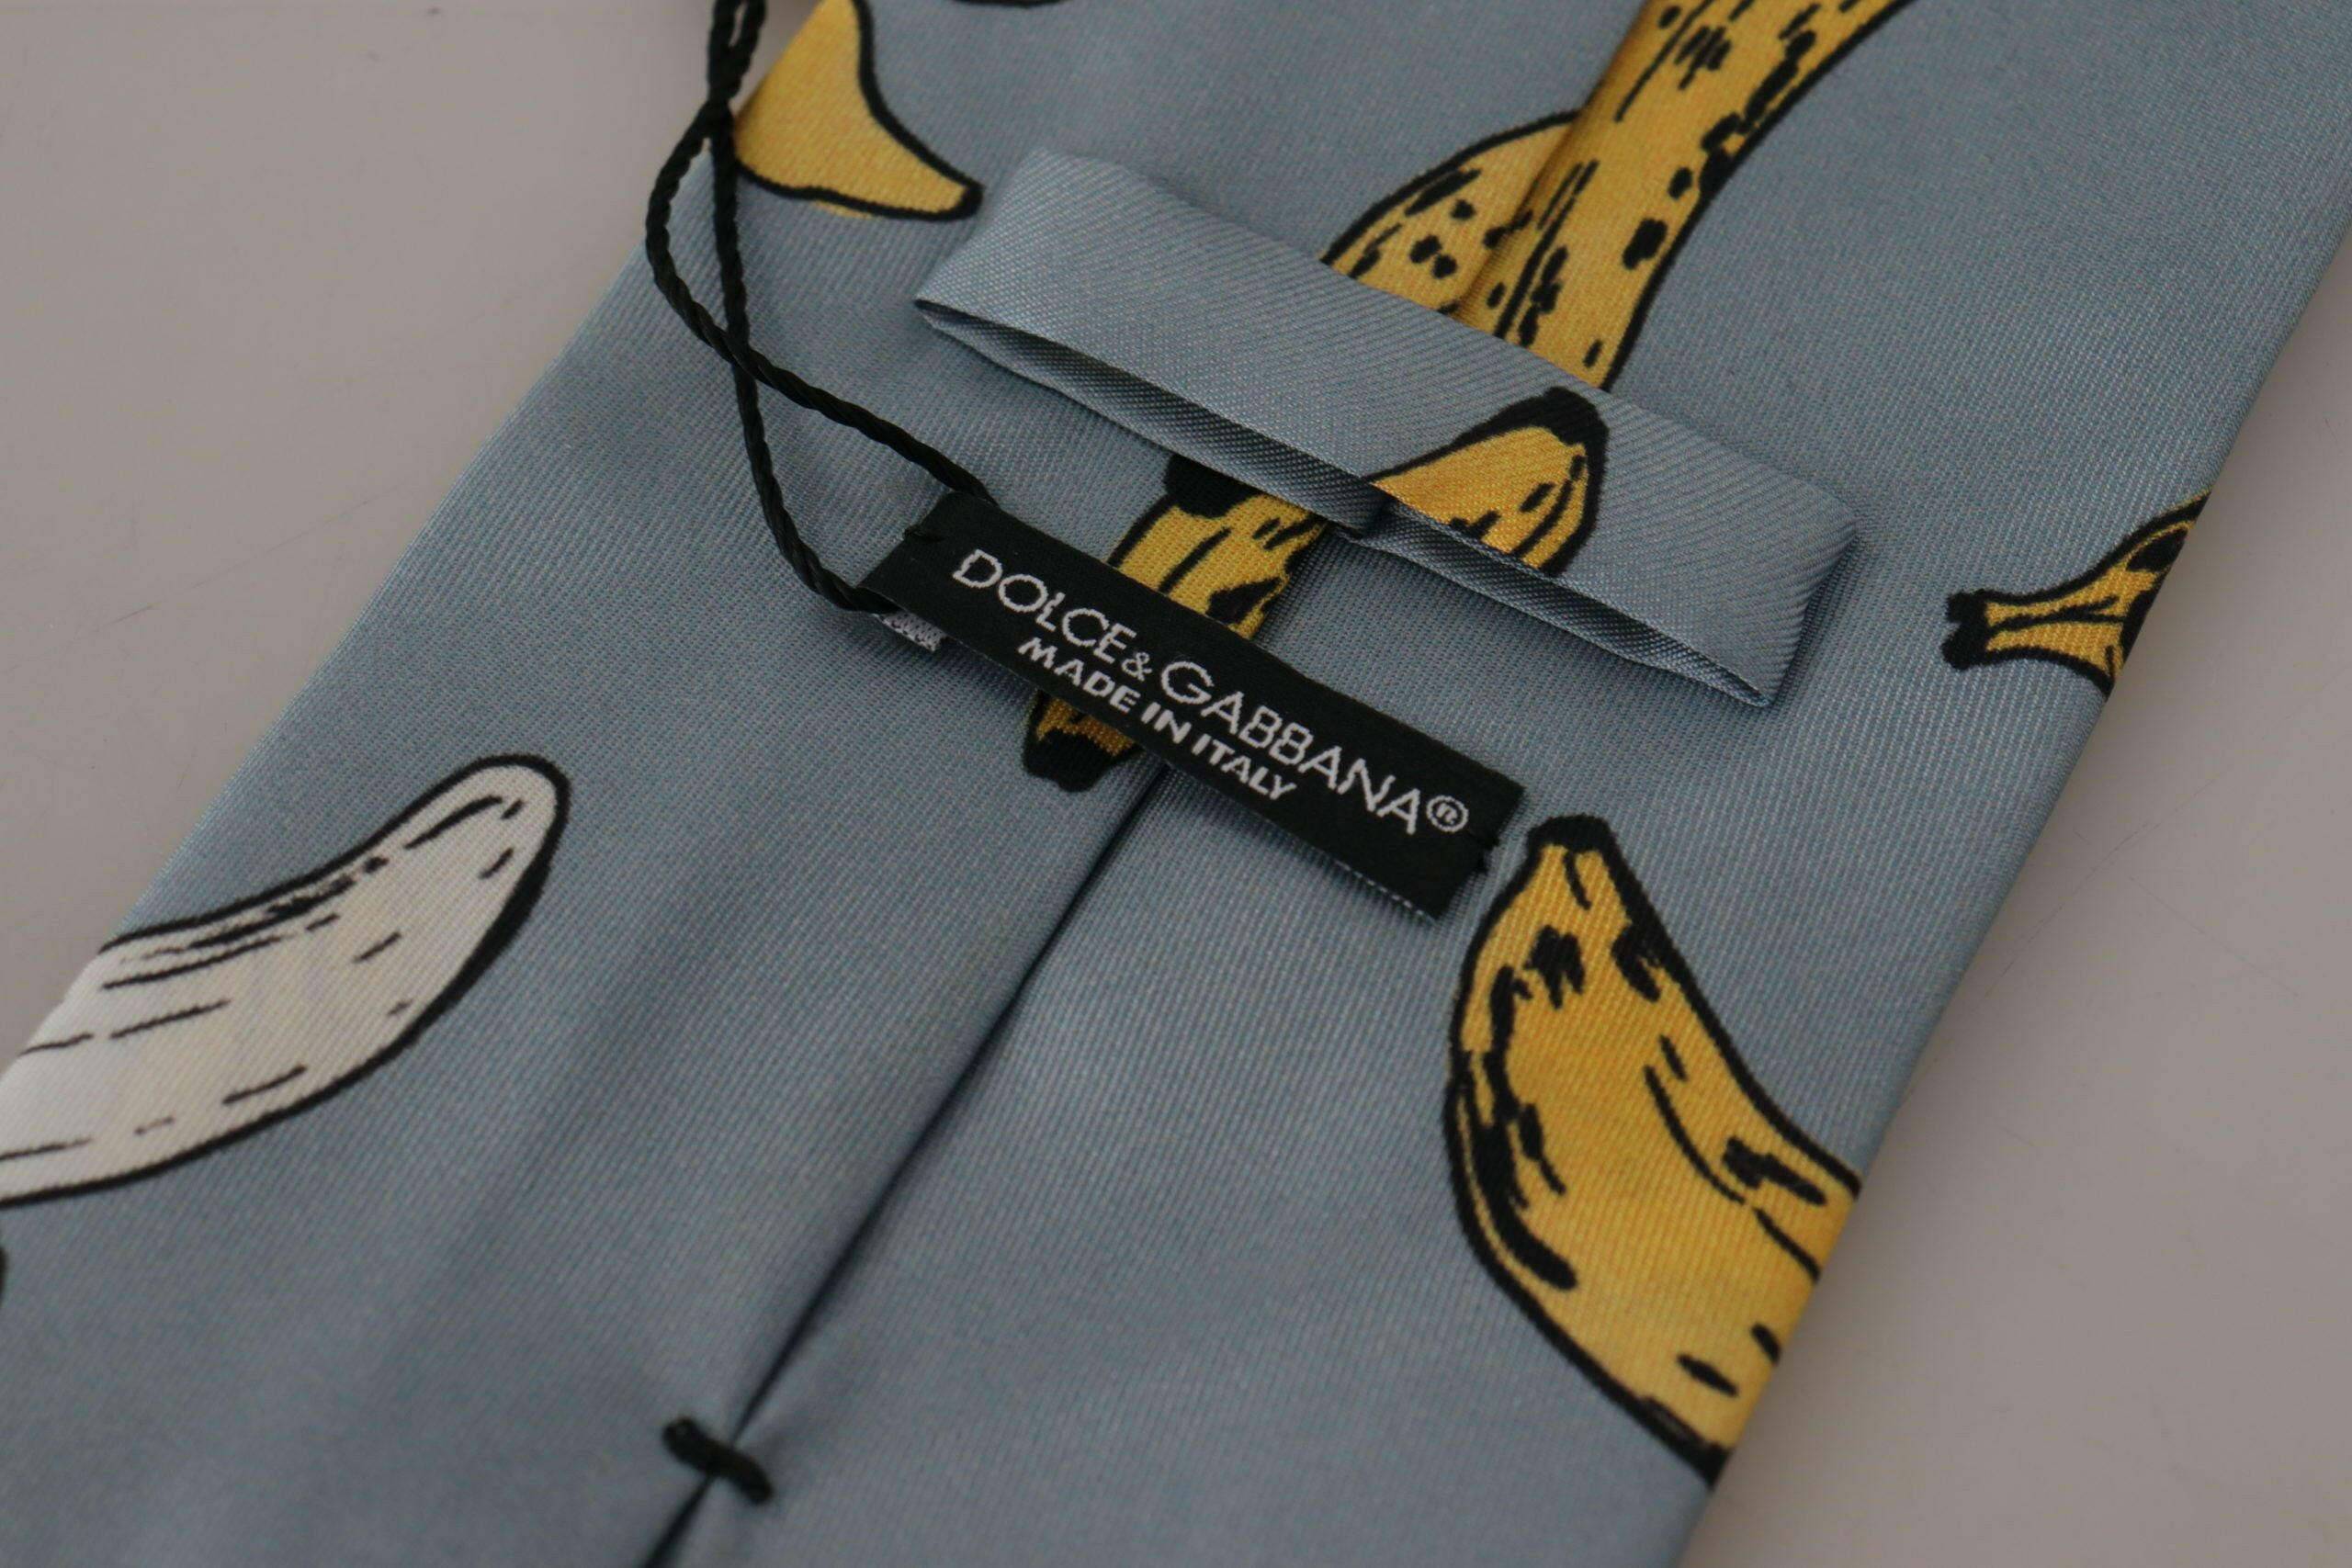 Dolce & Gabbana Blue Yellow Banana Print Necktie Accessory 100%Silk  Tie - GENUINE AUTHENTIC BRAND LLC  